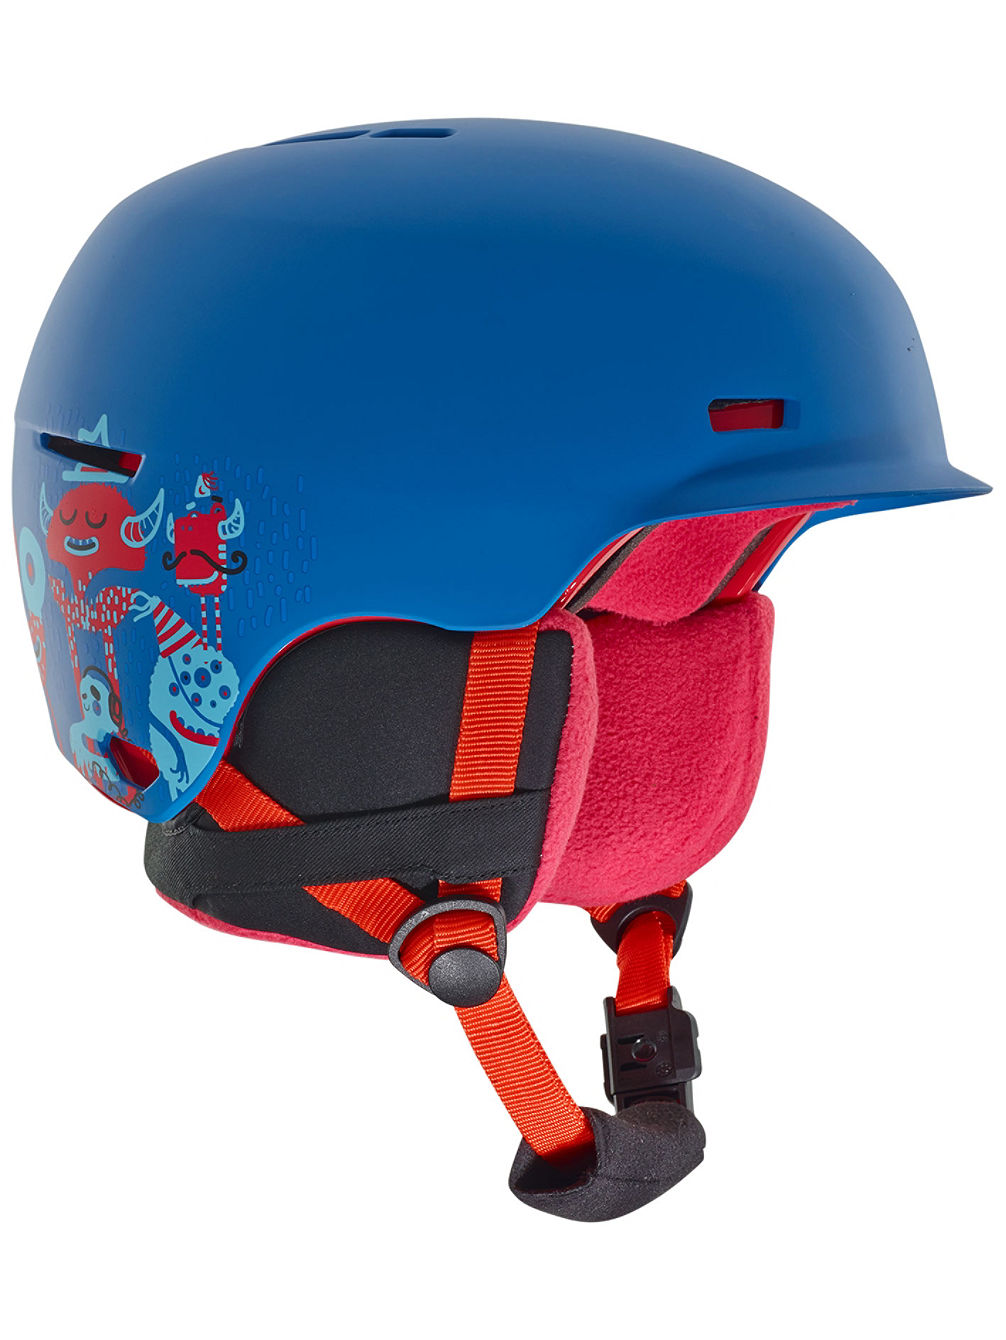 Flash Snowboard Helmet